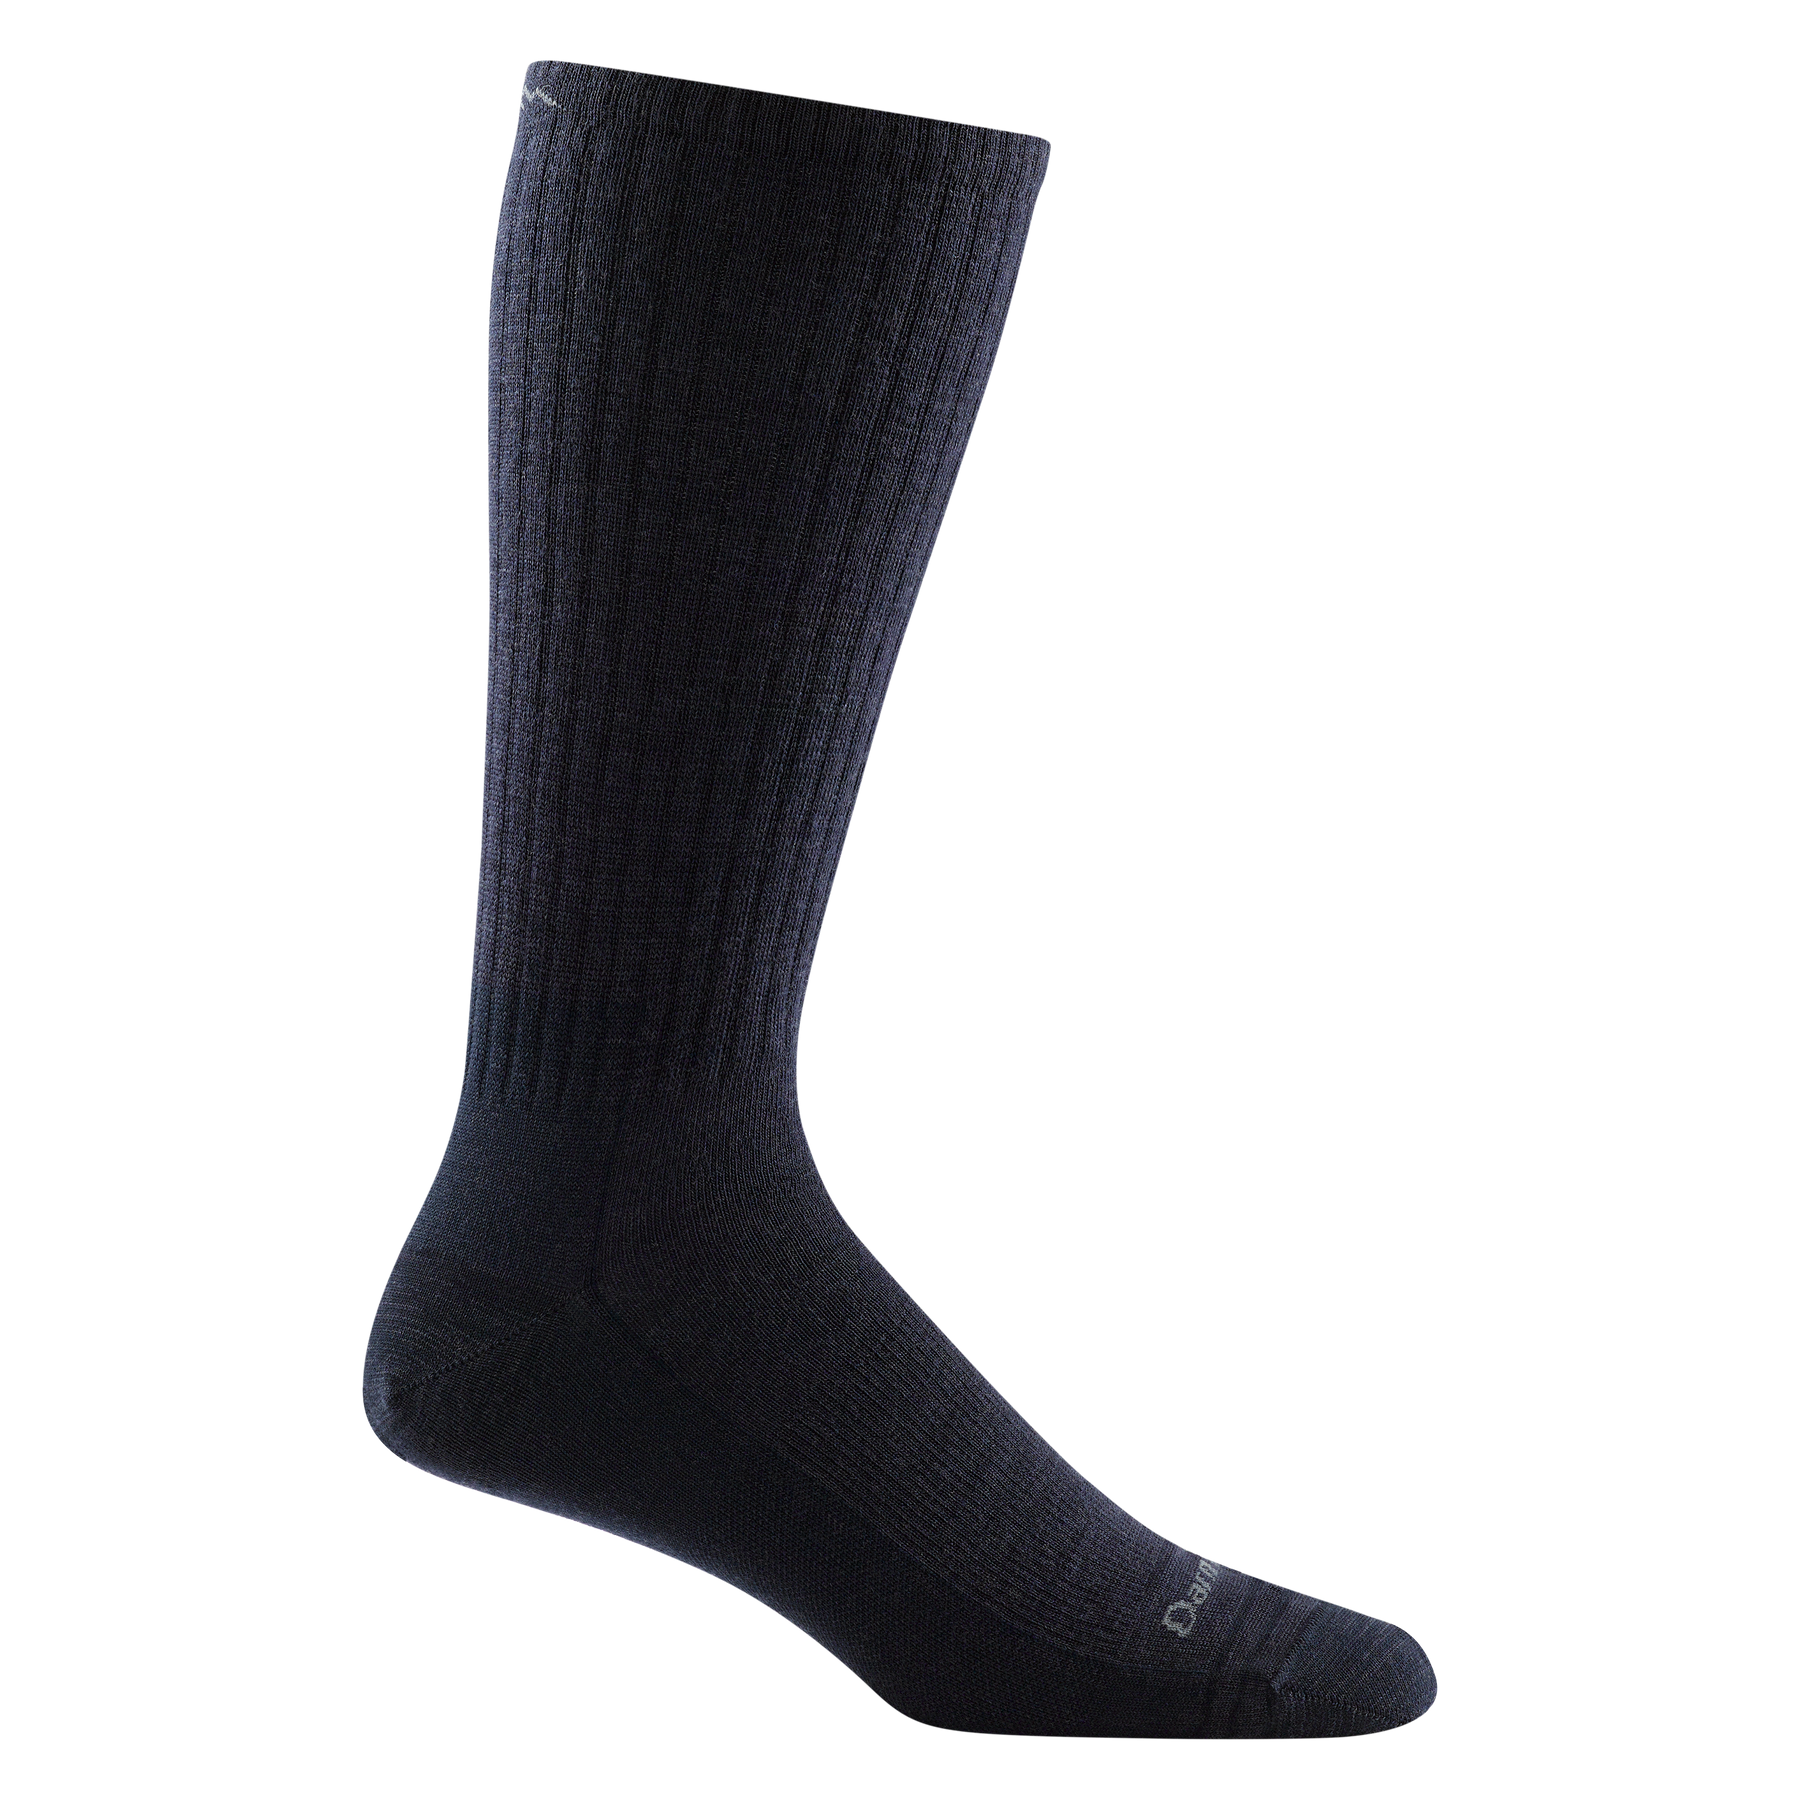 Darn Tough Merino Wool Mid Calf Lightweight Sock